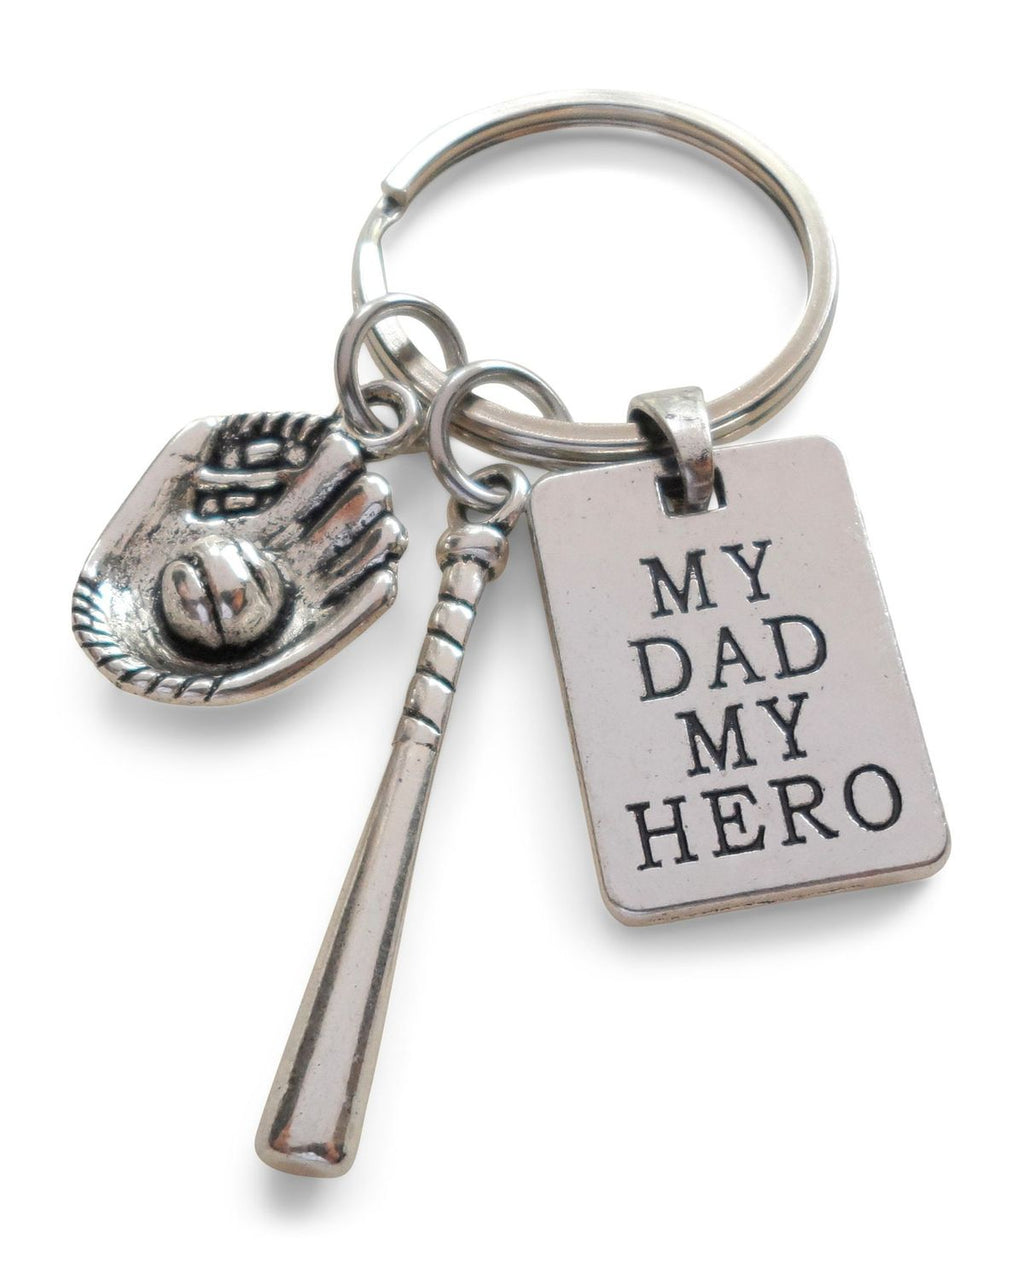 My Dad My Hero Keychain with Baseball Glove and Bat Charm, Father's Keychain